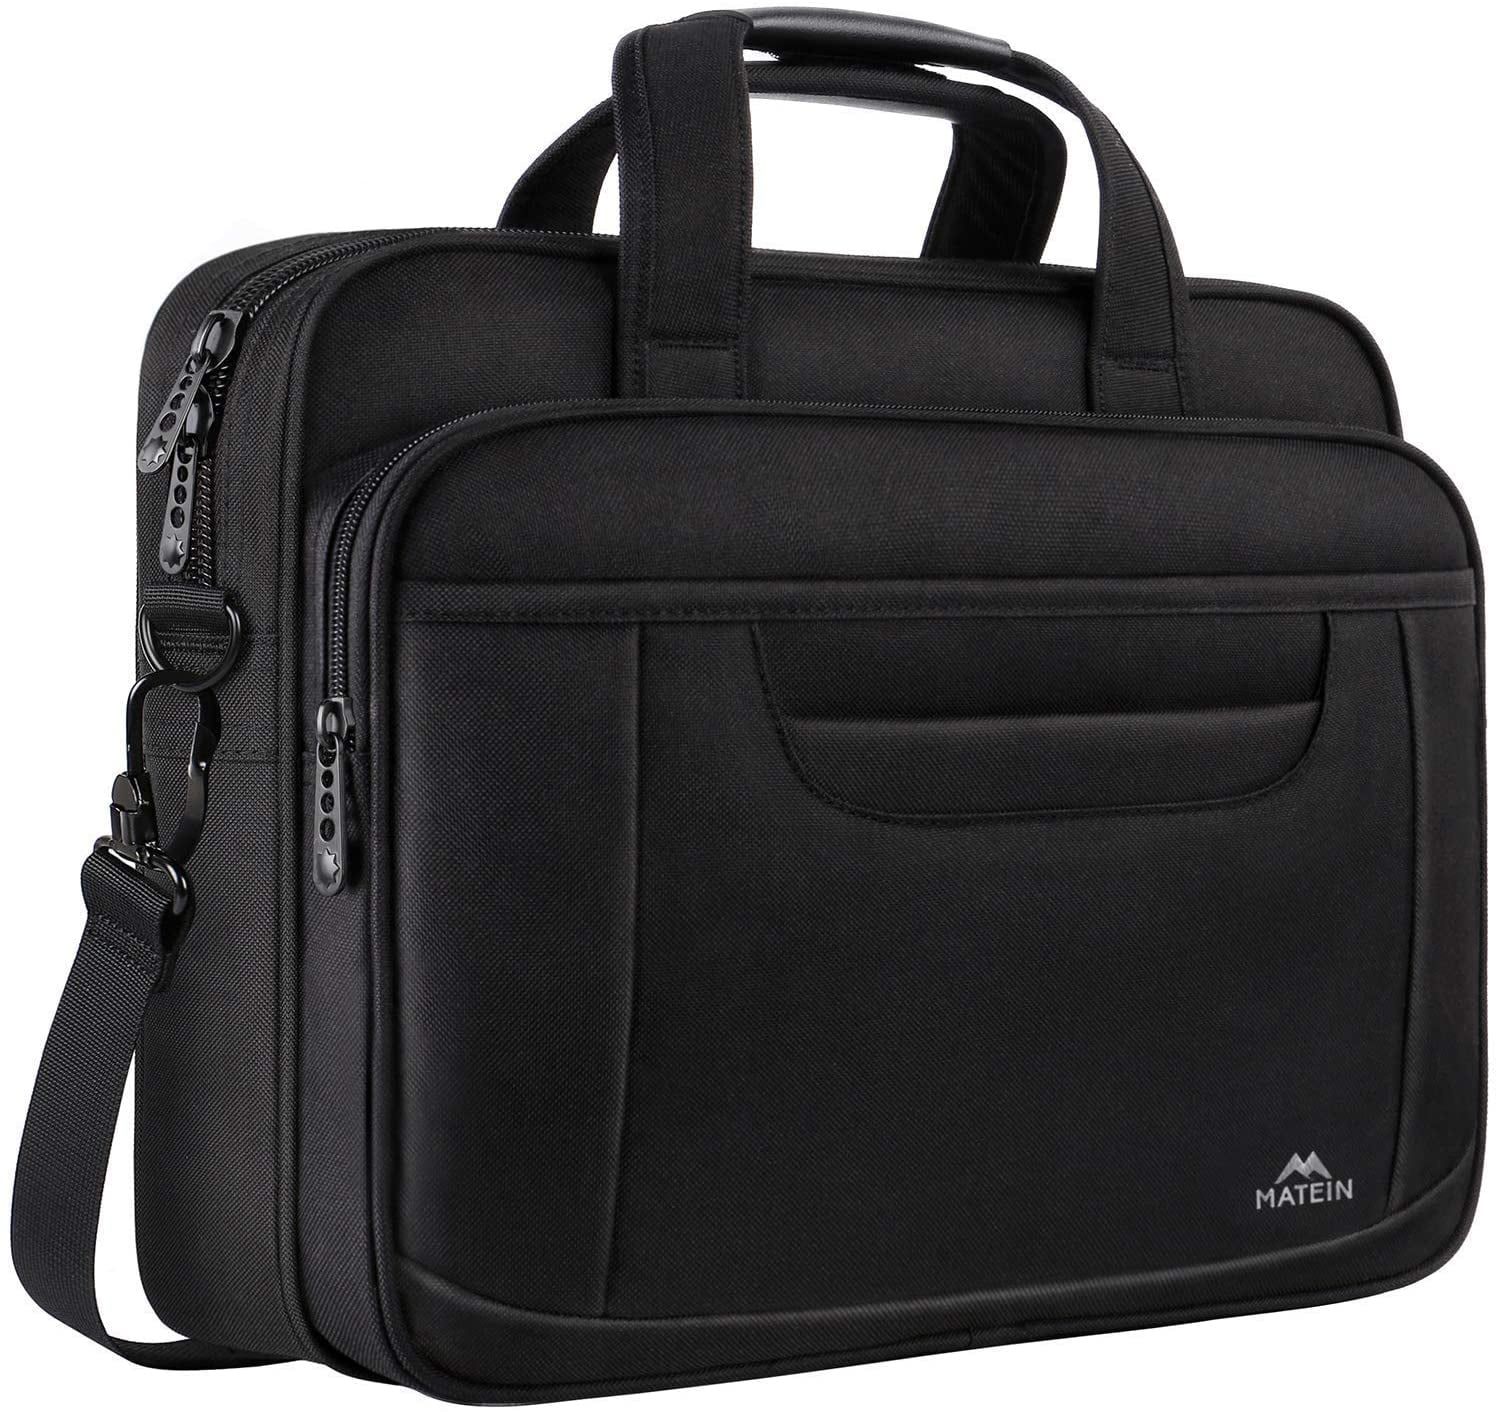 MATEH Delicious Sushi Laptop Sleeve Case 14 Inch Computer Tote Bag Shoulder Messenger Briefcase for Business Travel 